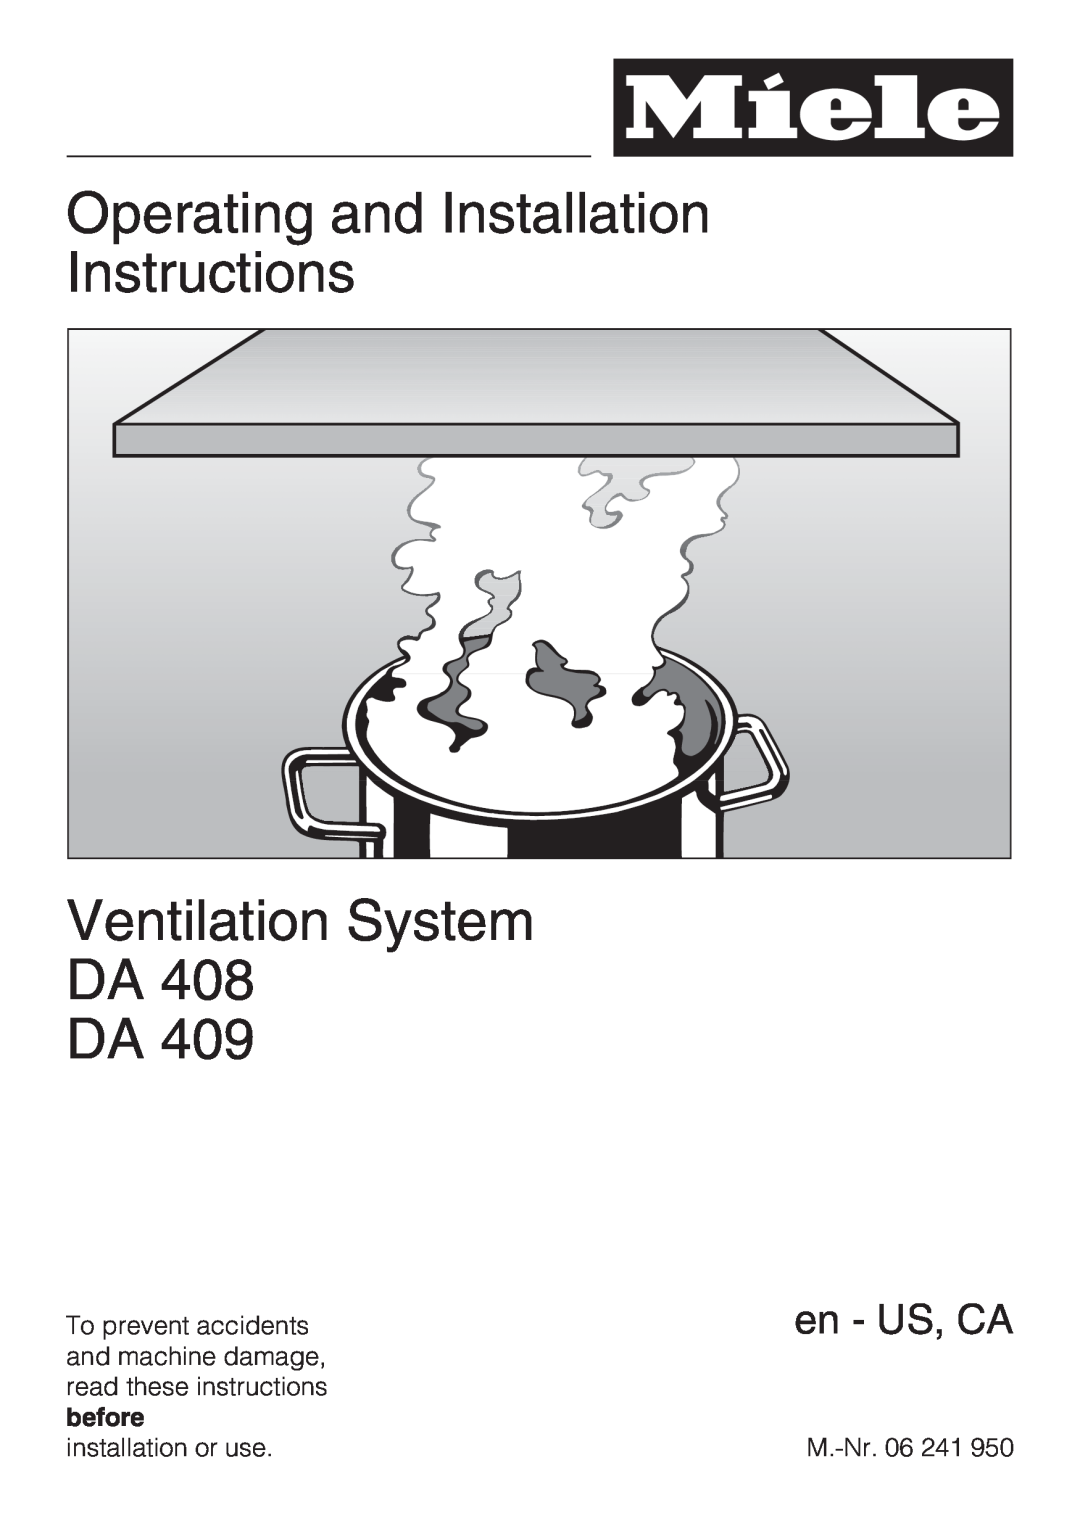 Miele DA409 installation instructions Operating and Installation Instructions, Ventilation System DA DA, en - US, CA 